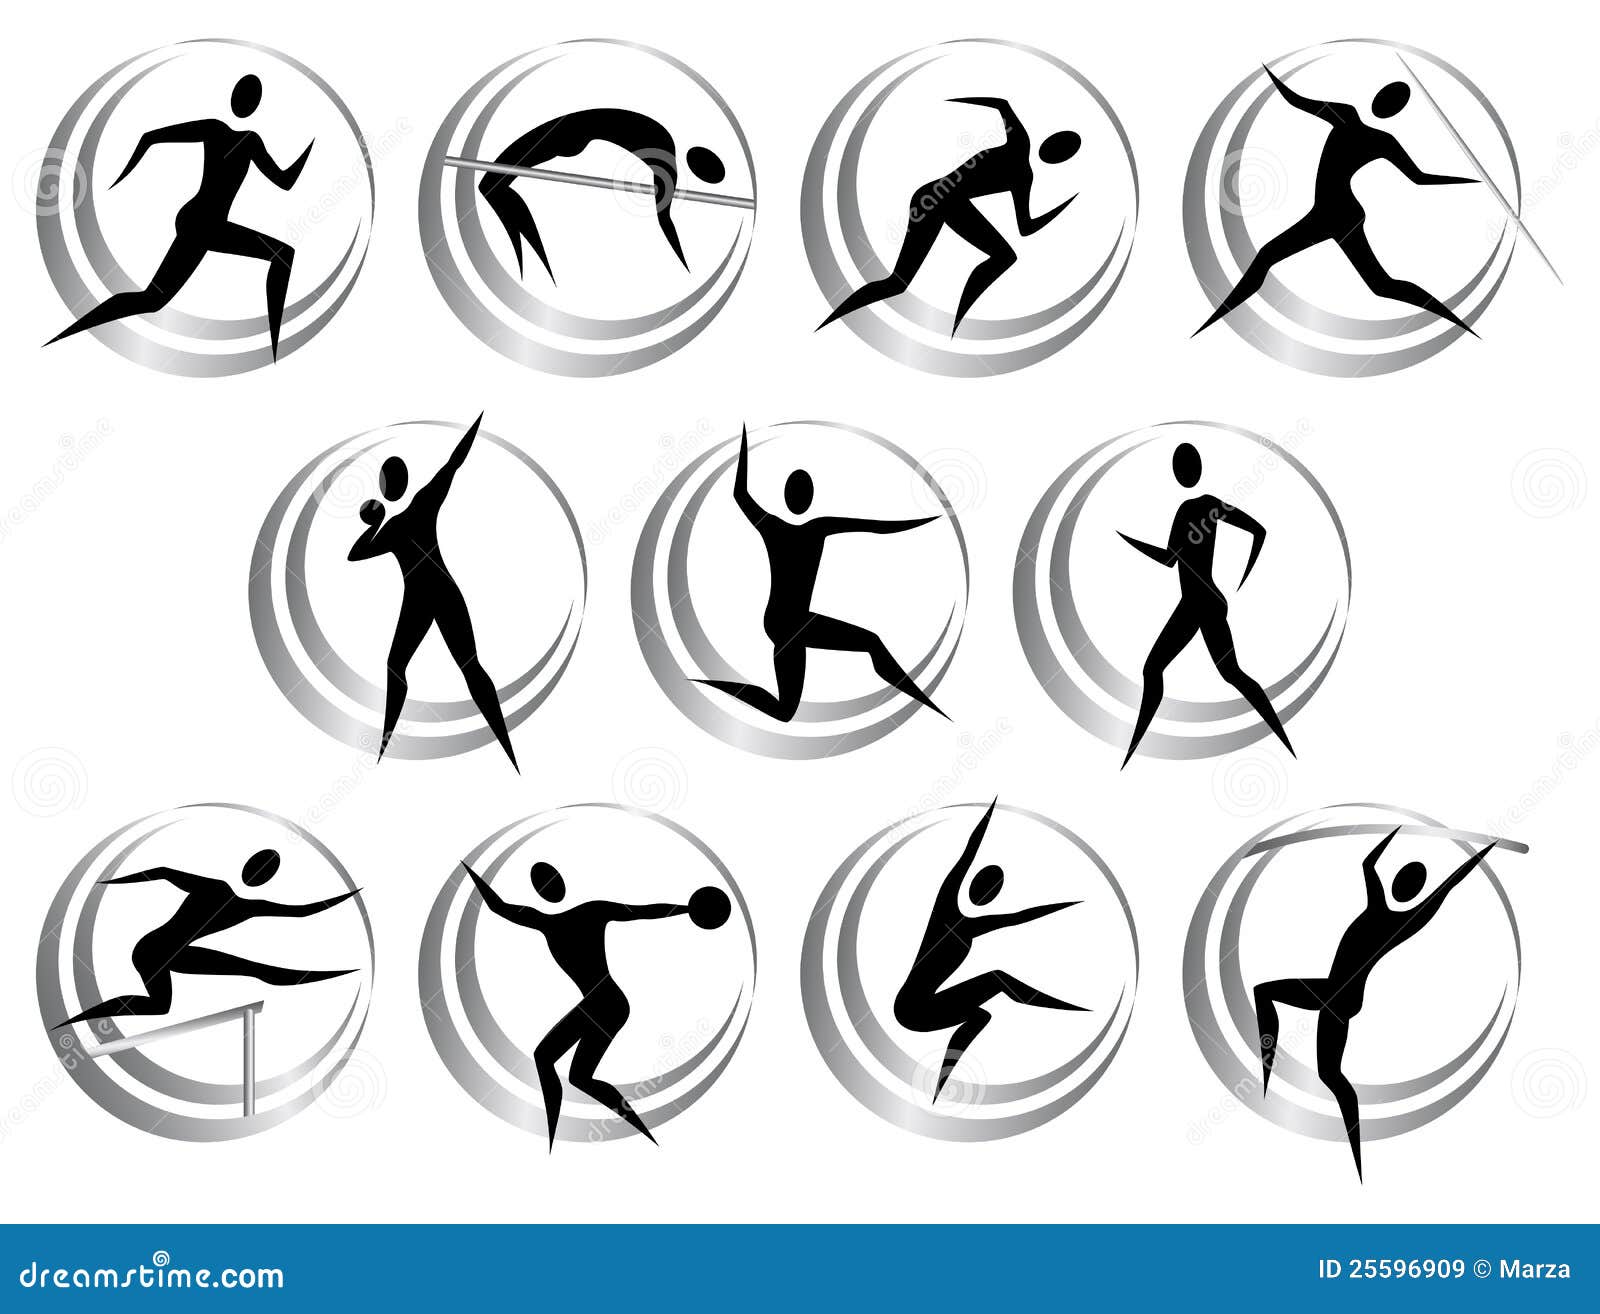 Athletic Icons & Symbols